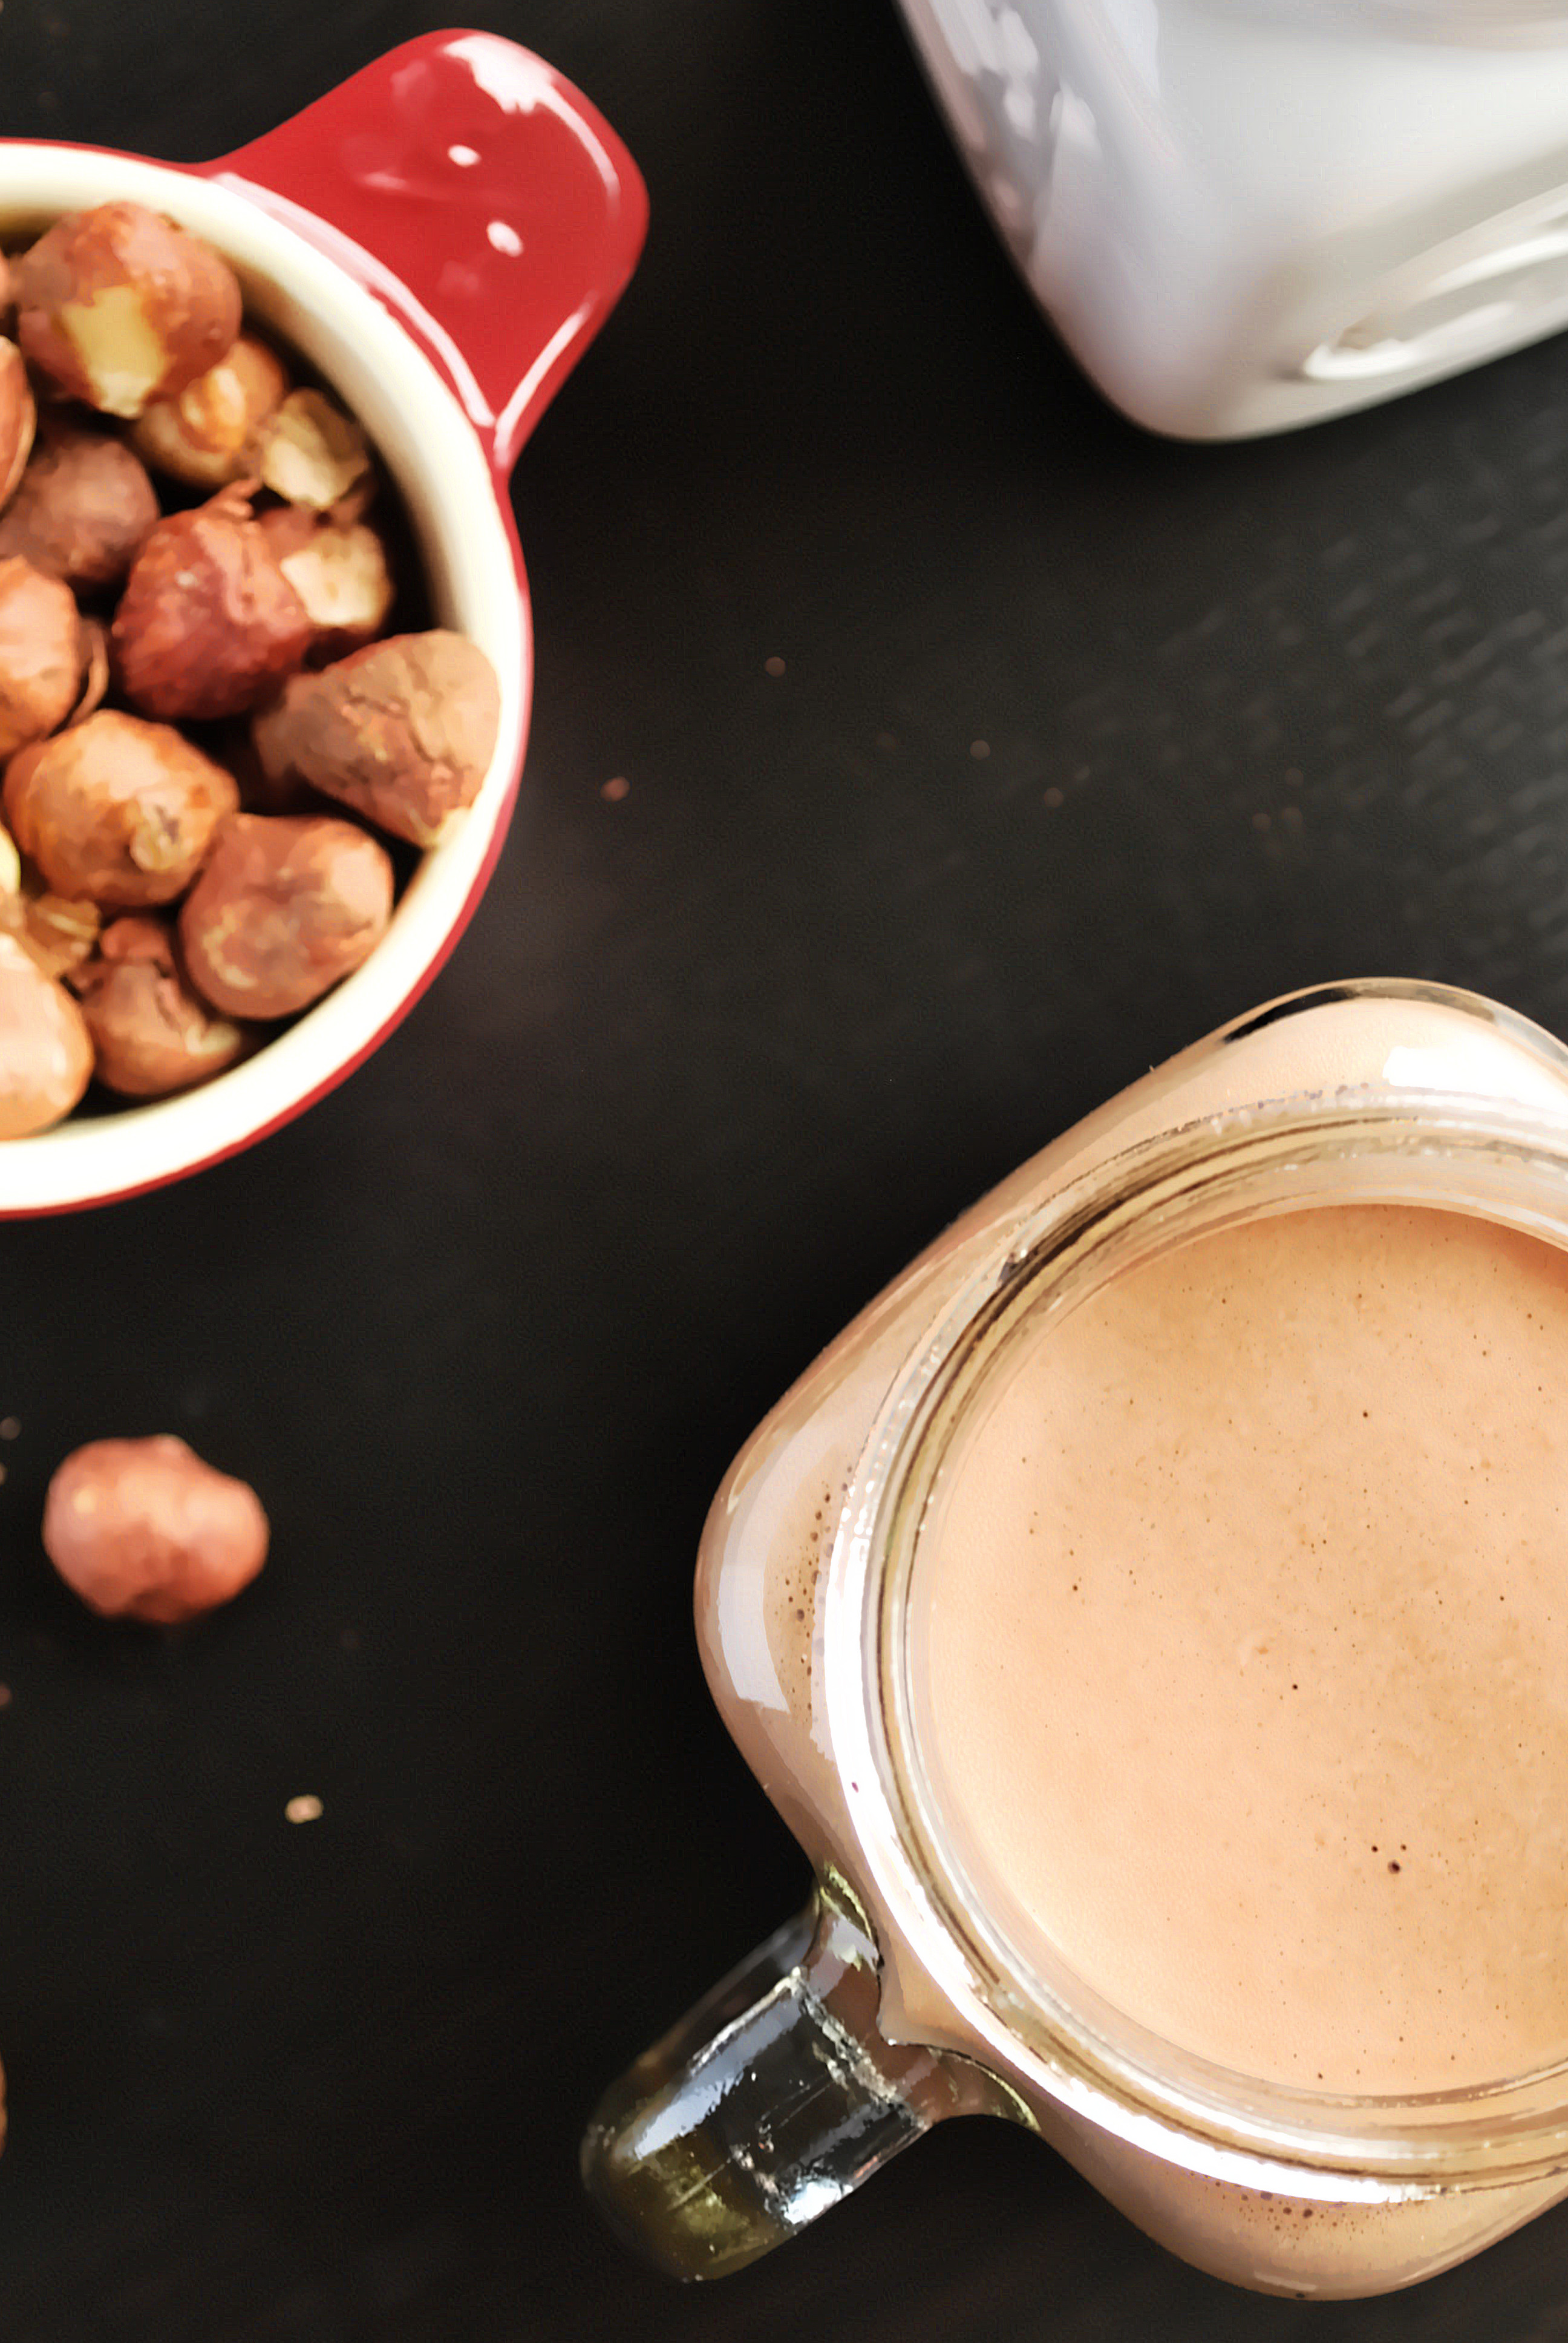 Nutella Milk: An ultra-creamy, five ingredient homemade hazelnut milk that tastes just like Nutella! This gluten free, vegan, and paleo recipe is perfect for breakfast! || fooduzzi.com